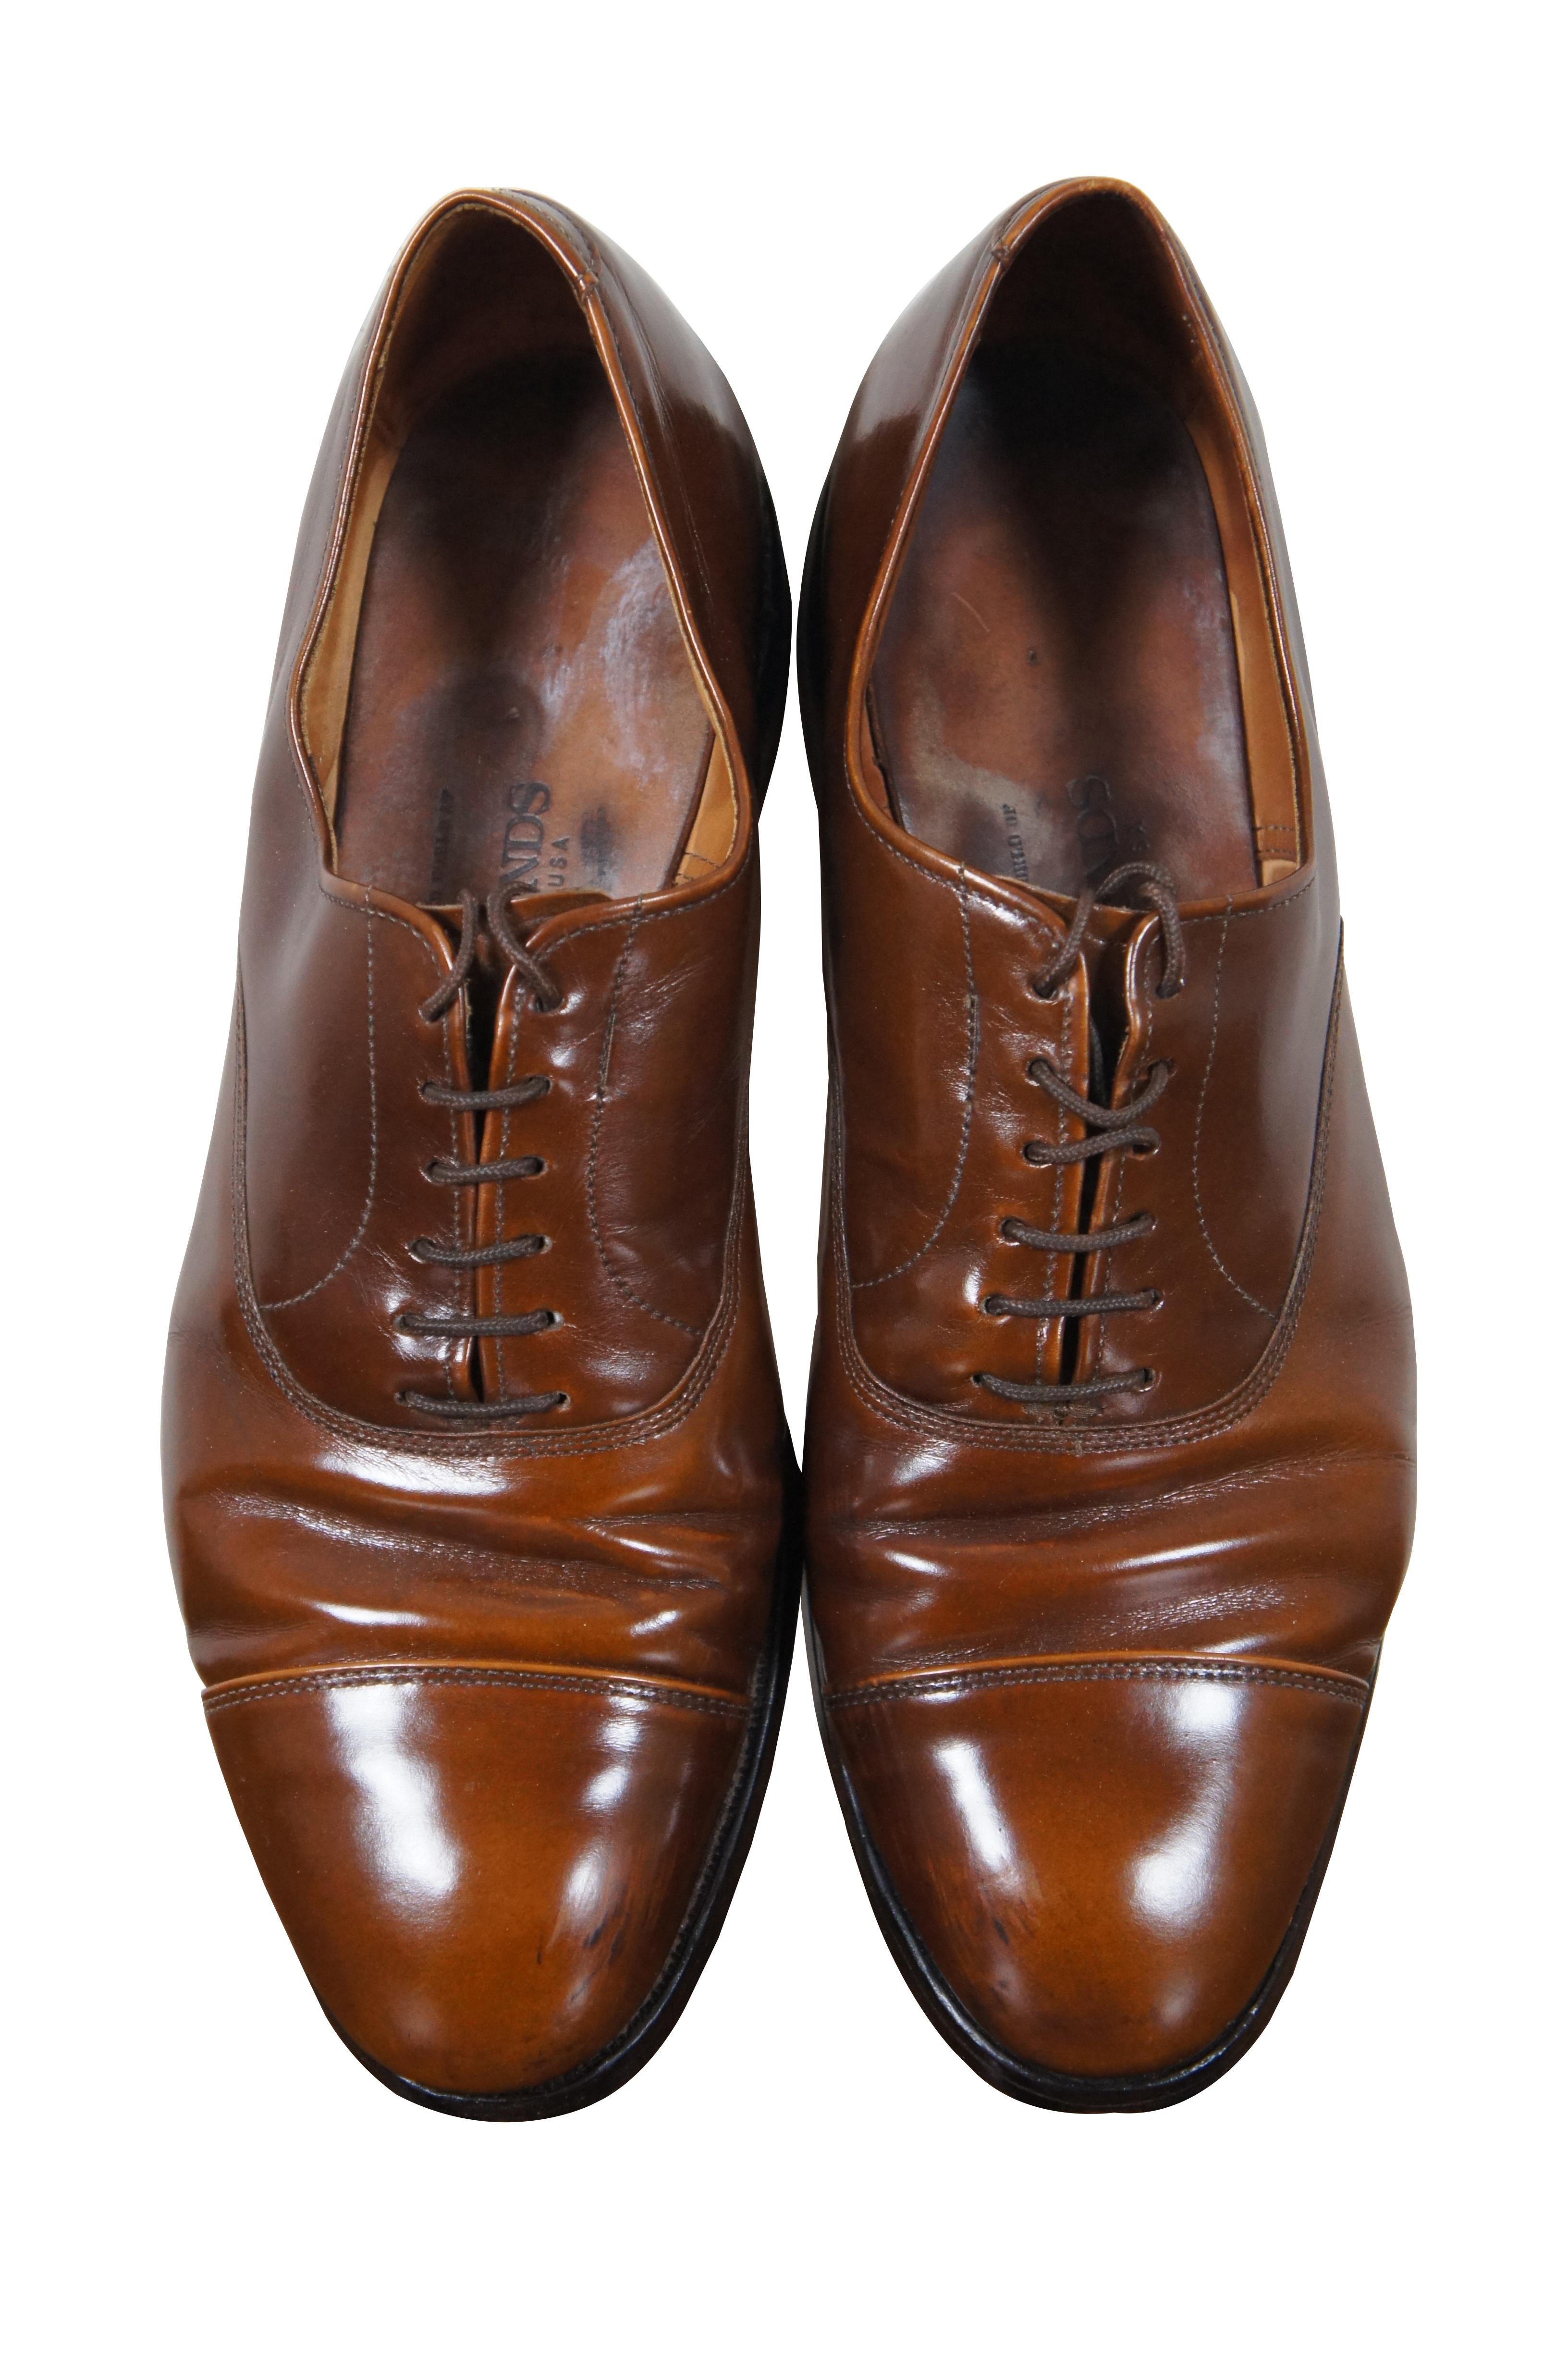 walnut dress shoes